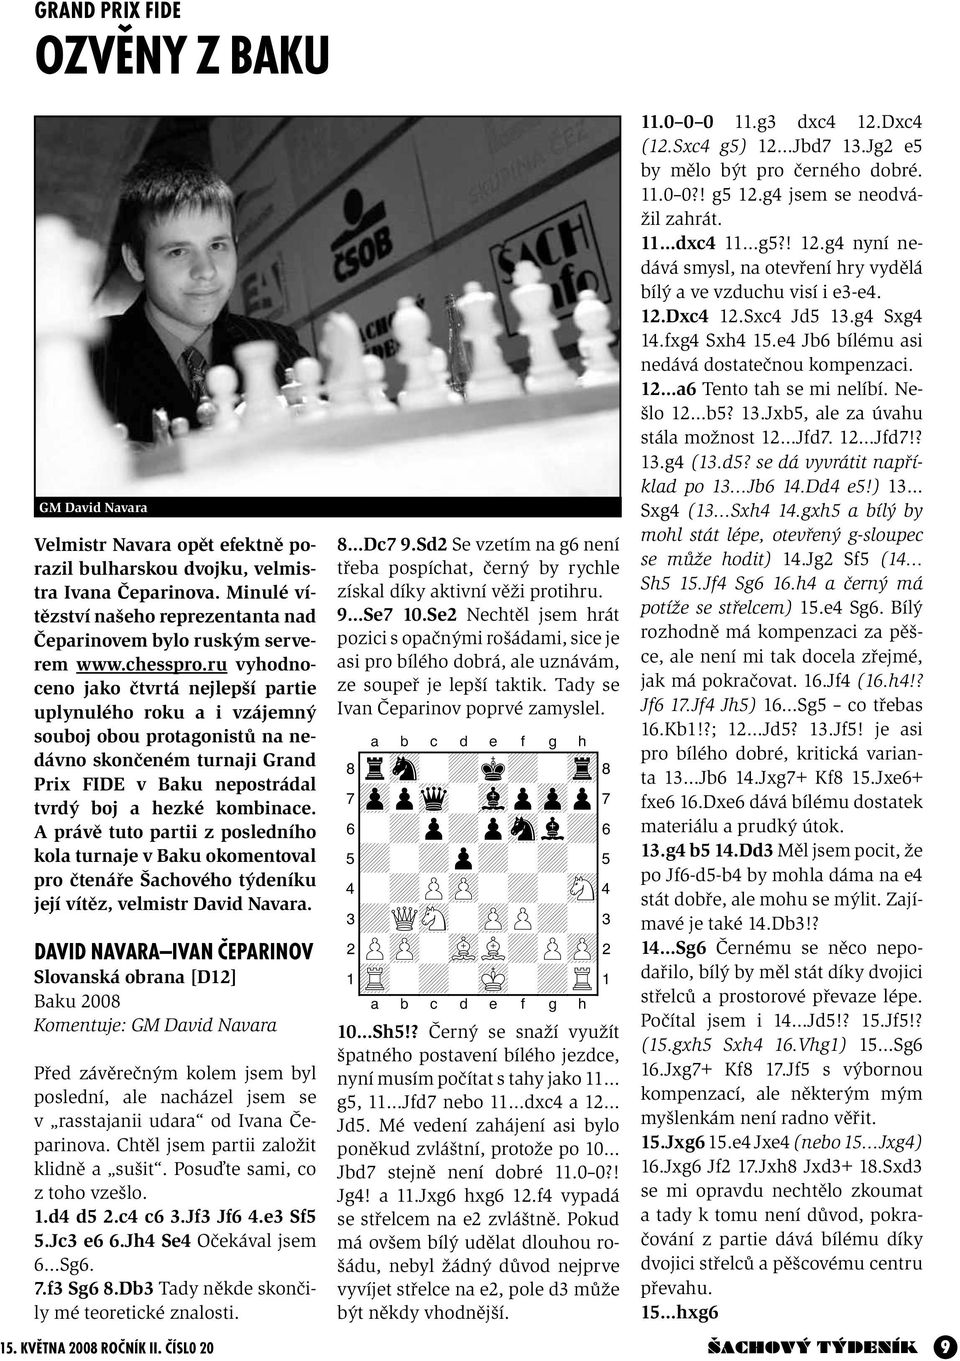 ru vyhodnoceno jako čtvrtá nejlepší partie uplynulého roku a i vzájemný souboj obou protagonistů na nedávno skončeném turnaji Grand Prix FIDE v Baku nepostrádal tvrdý boj a hezké kombinace.